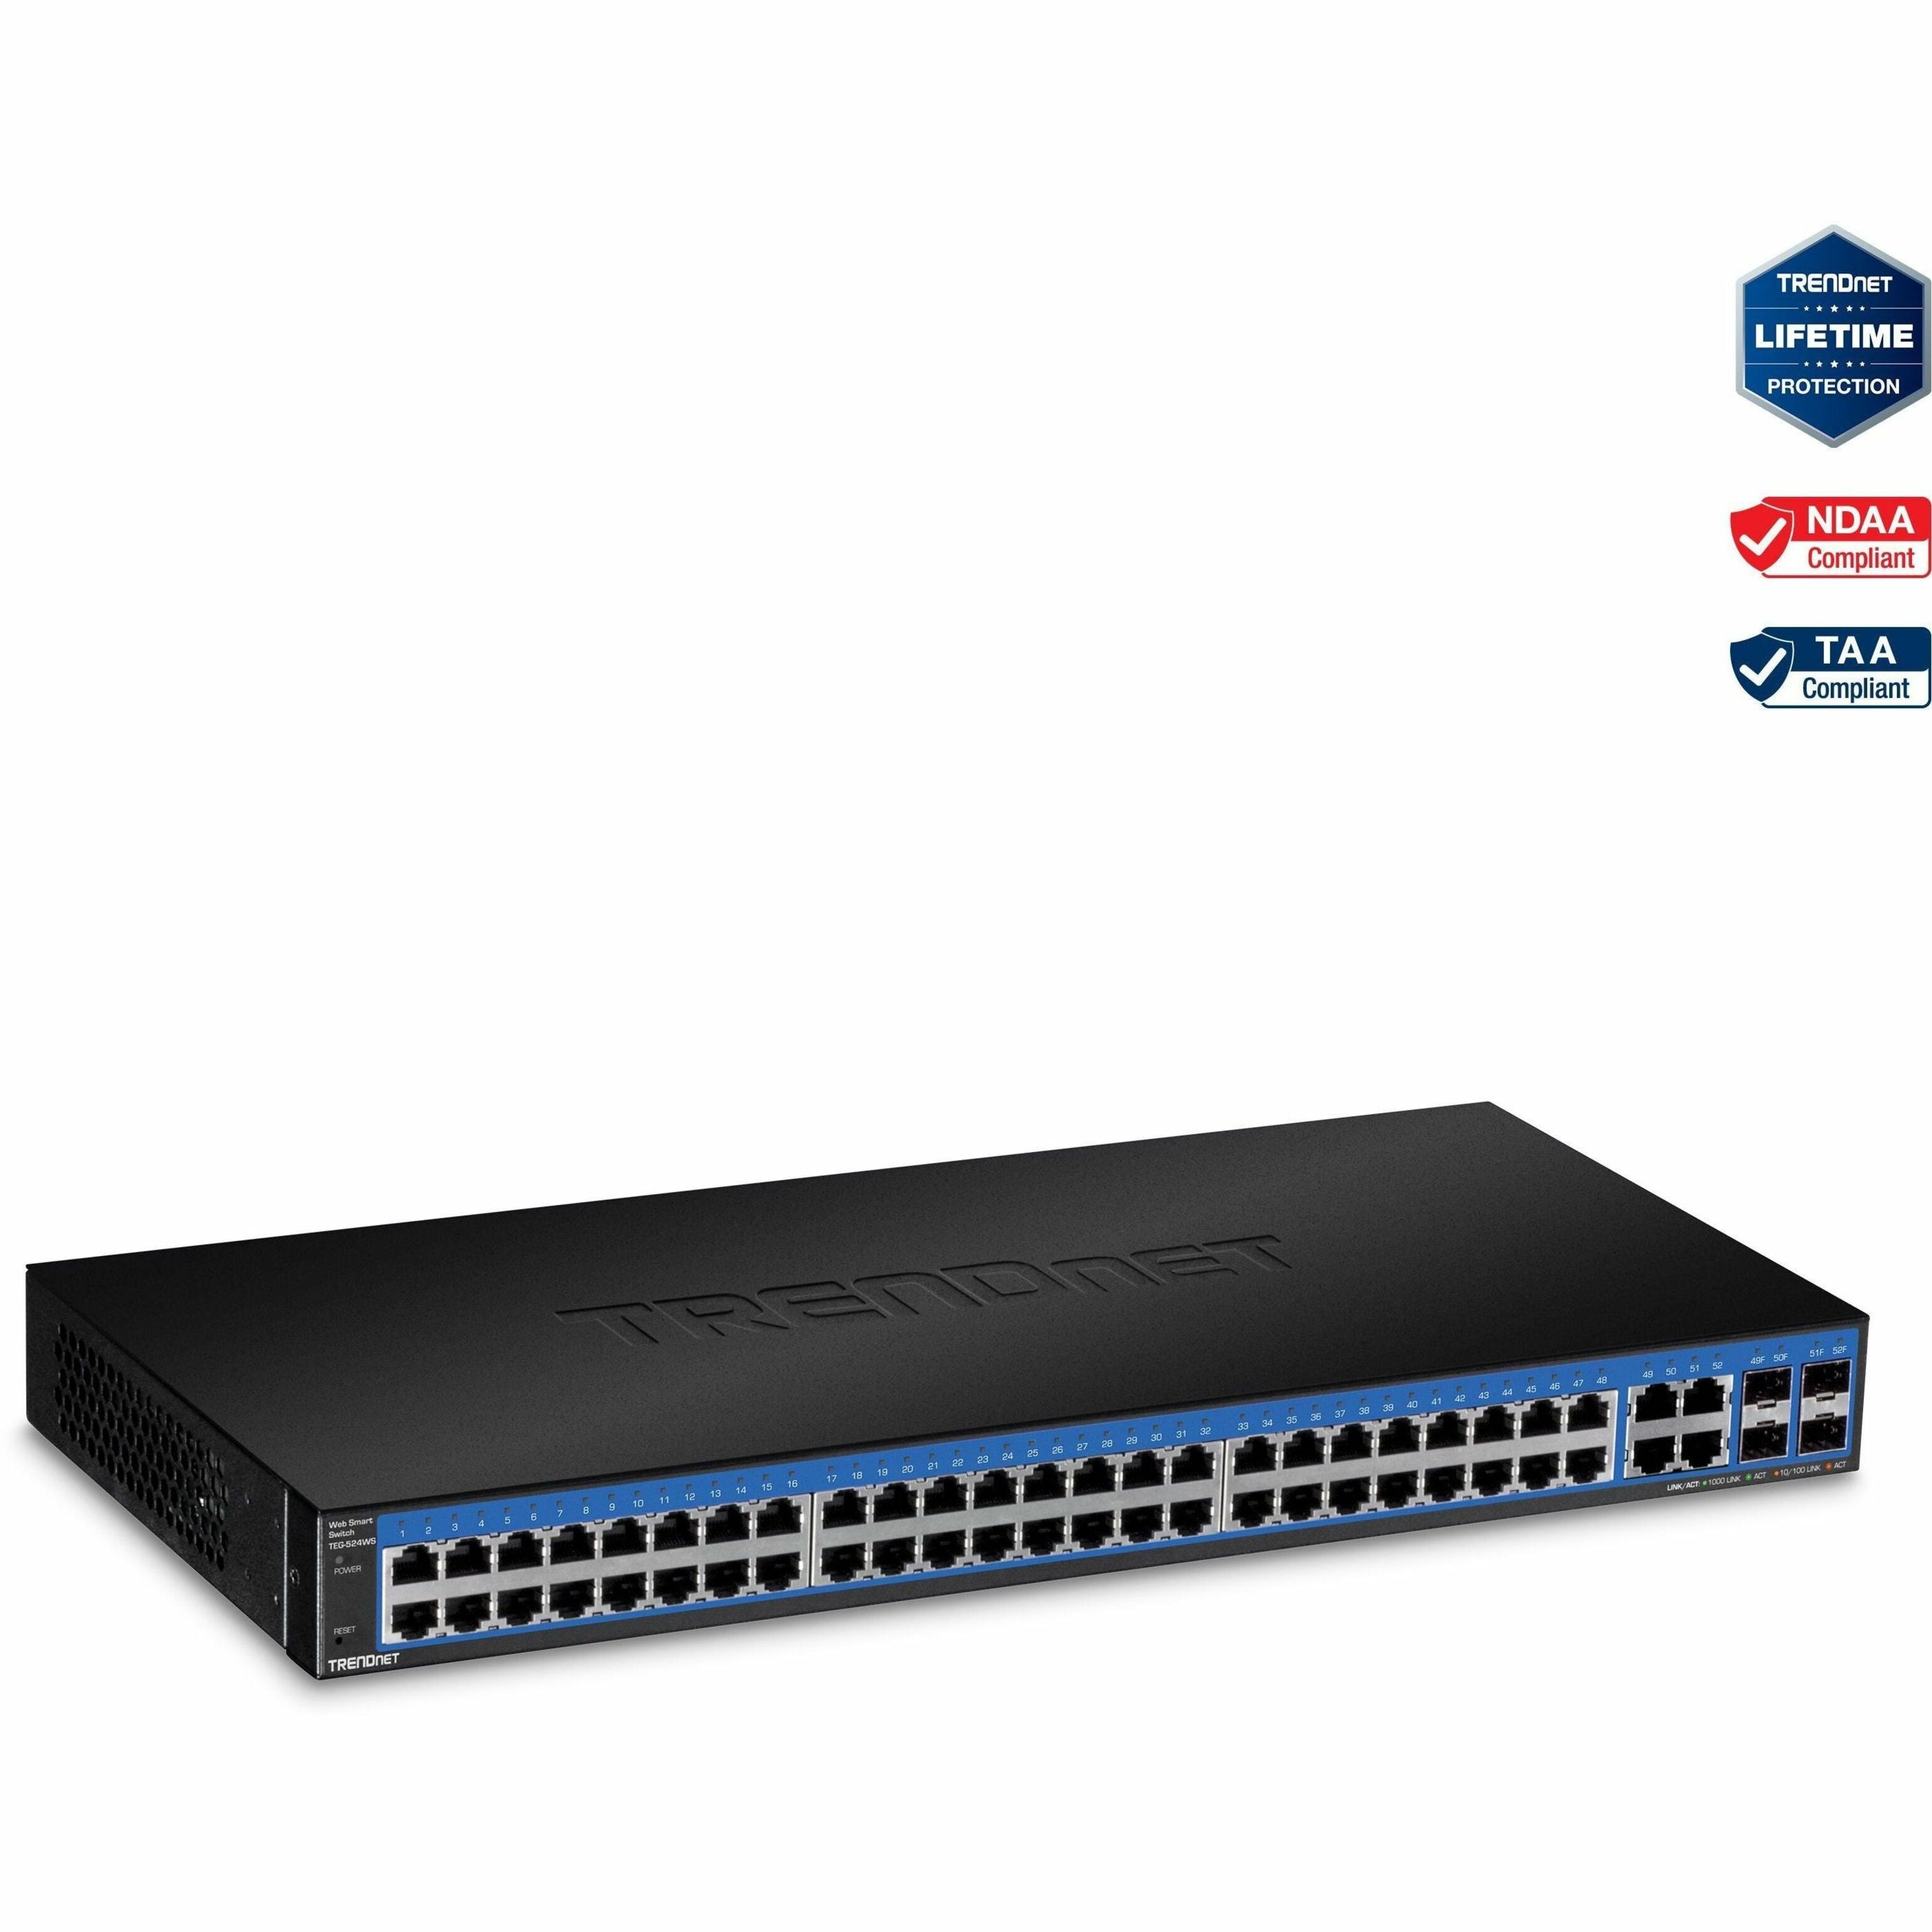 TRENDnet TEG-524WS 52-Port Gigabit Web Smart Switch, 104 Gbps Switching Capacity, VLAN, QoS, LACP, IPv6, Lifetime Protection